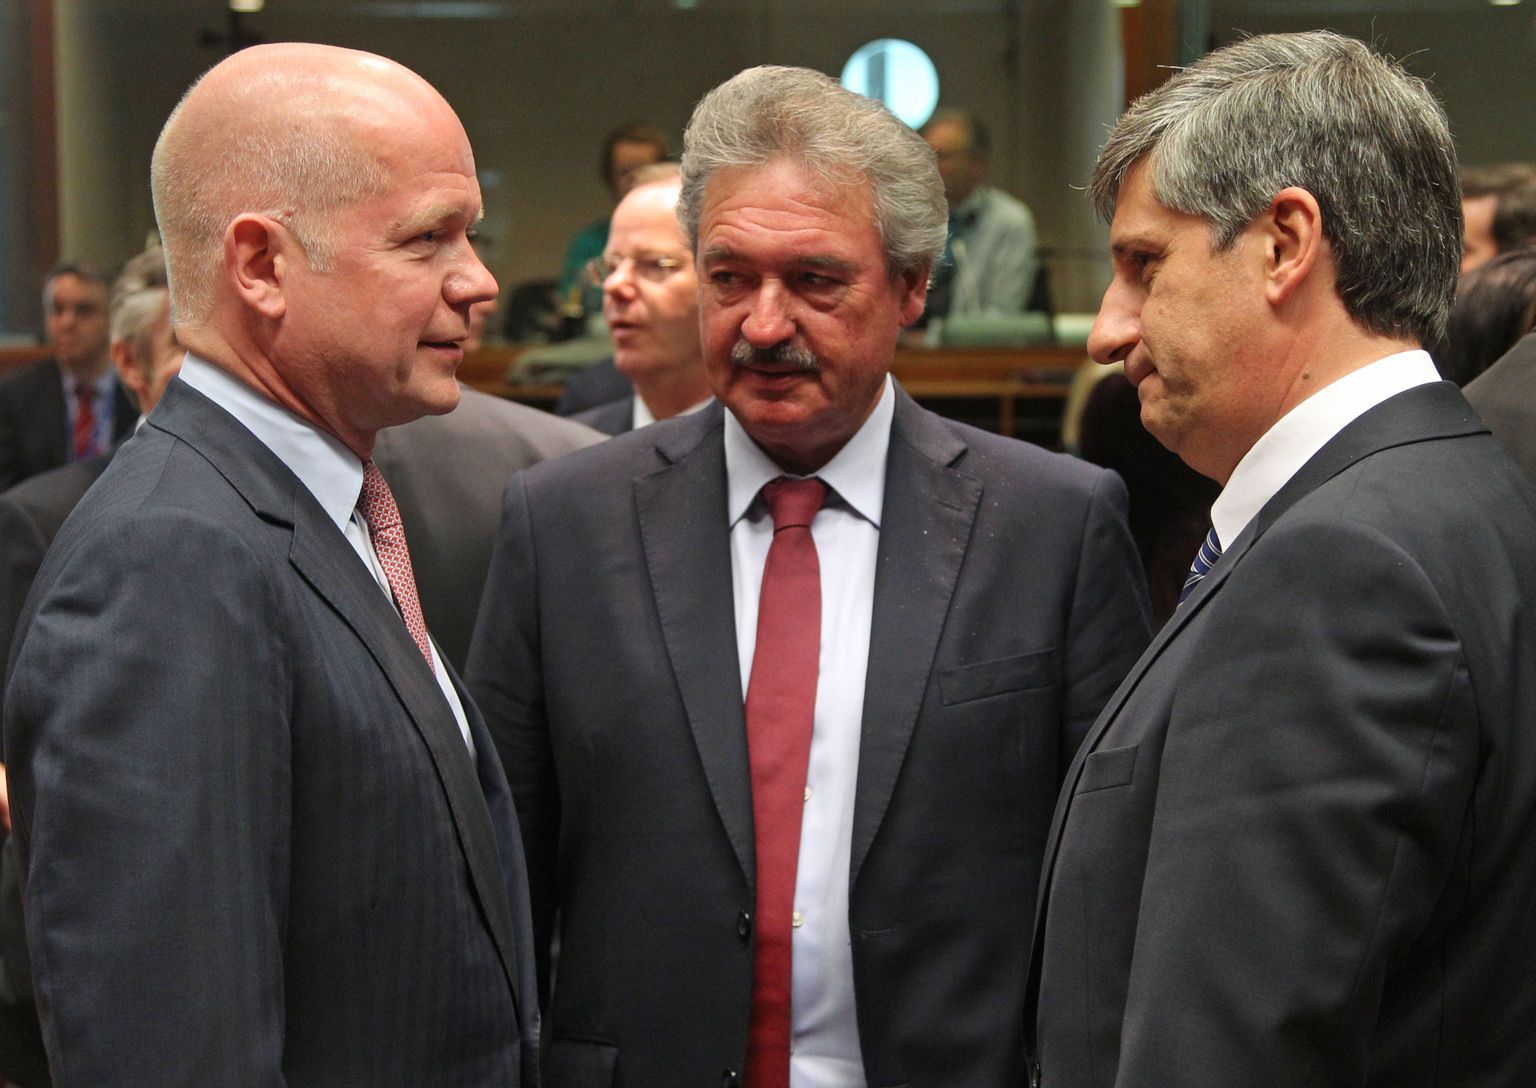 Briti välisminister William Hague, Luksemburgi välisminister Jean Asselborn ja Austria välisminister Michael Spindelegger.